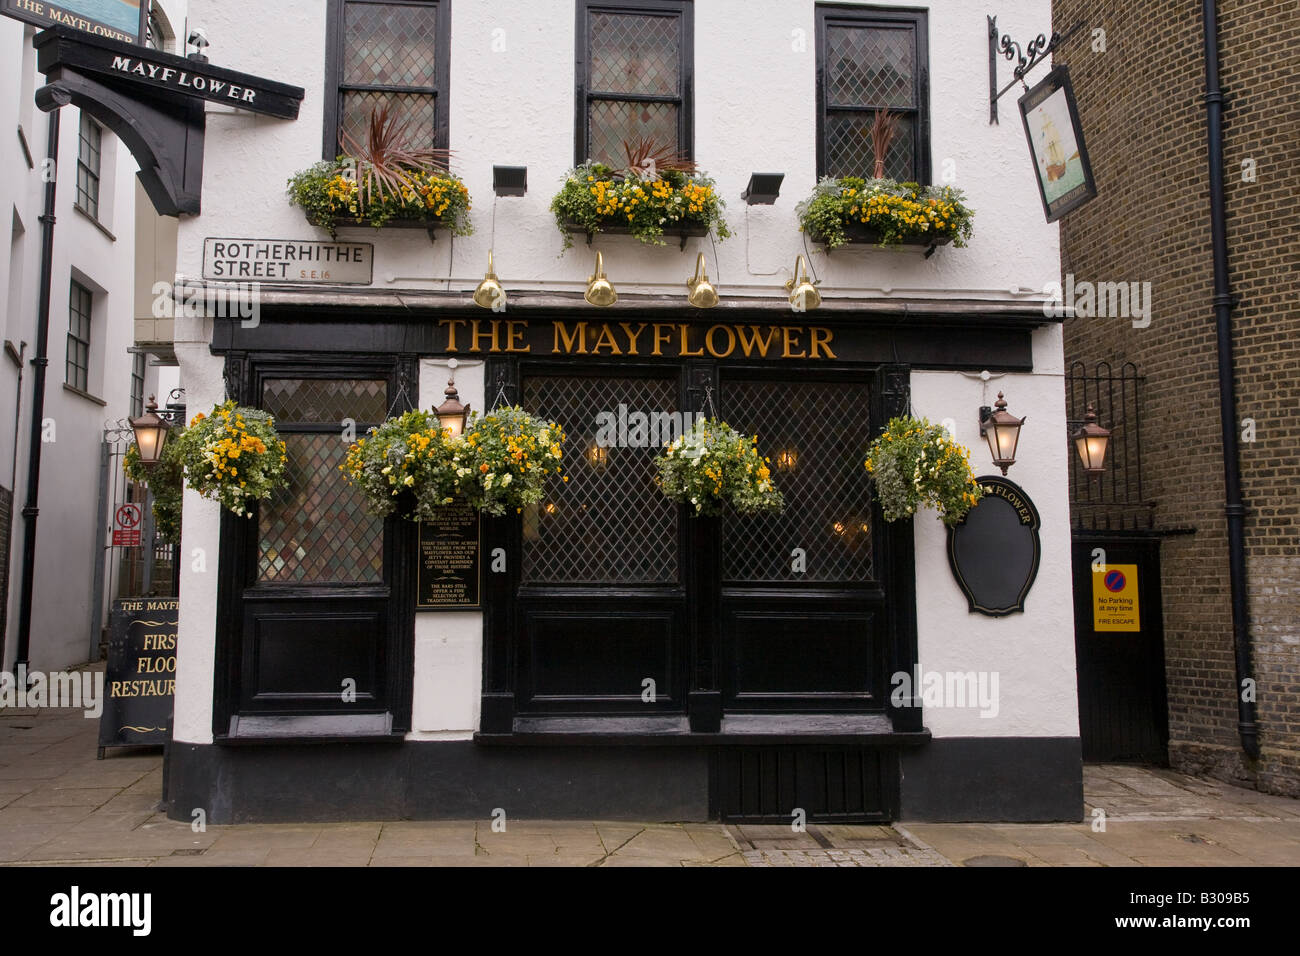 The Mayflower, Rotherhithe Street, London Stock Photo